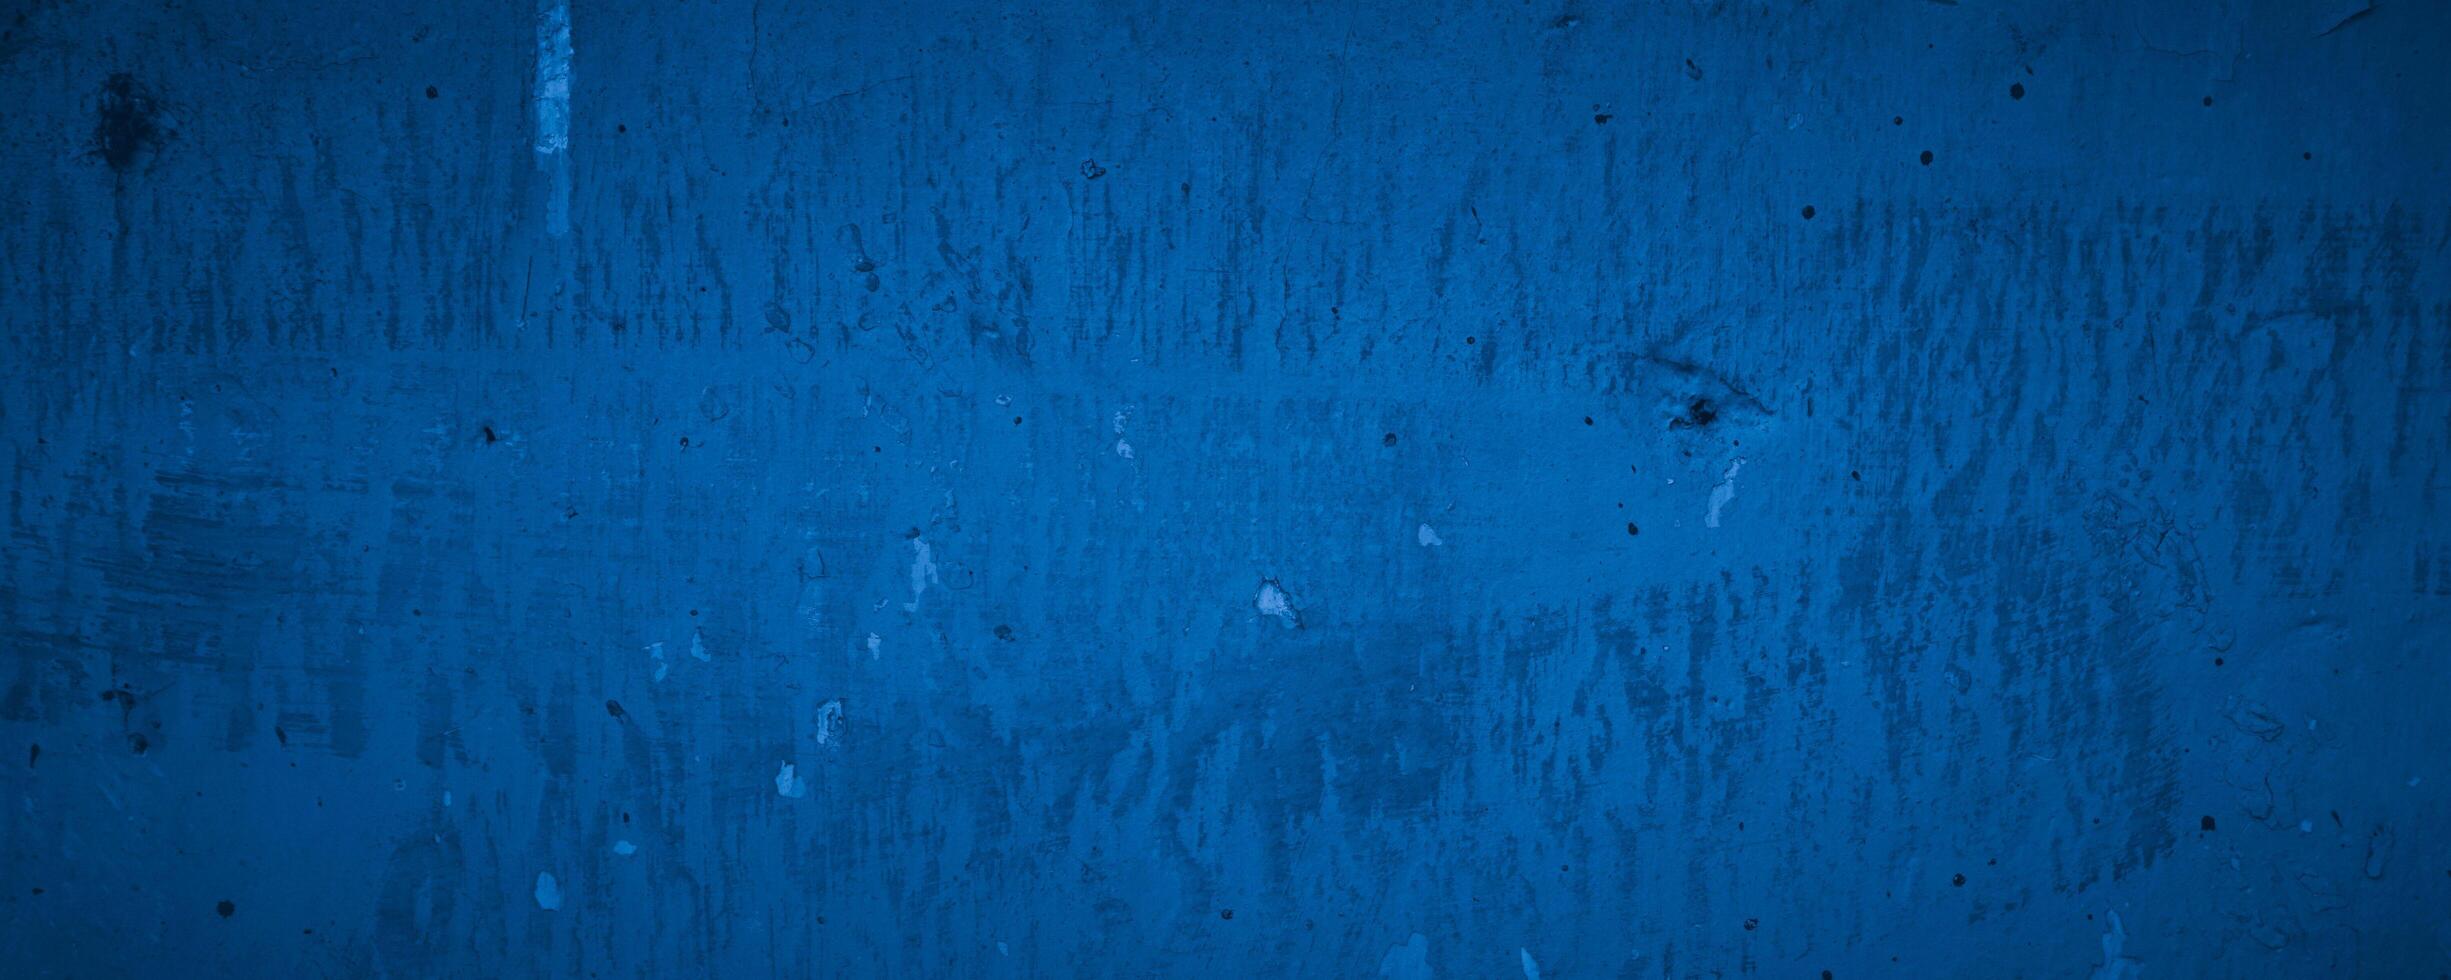 texture abstrait bleu mur Contexte photo